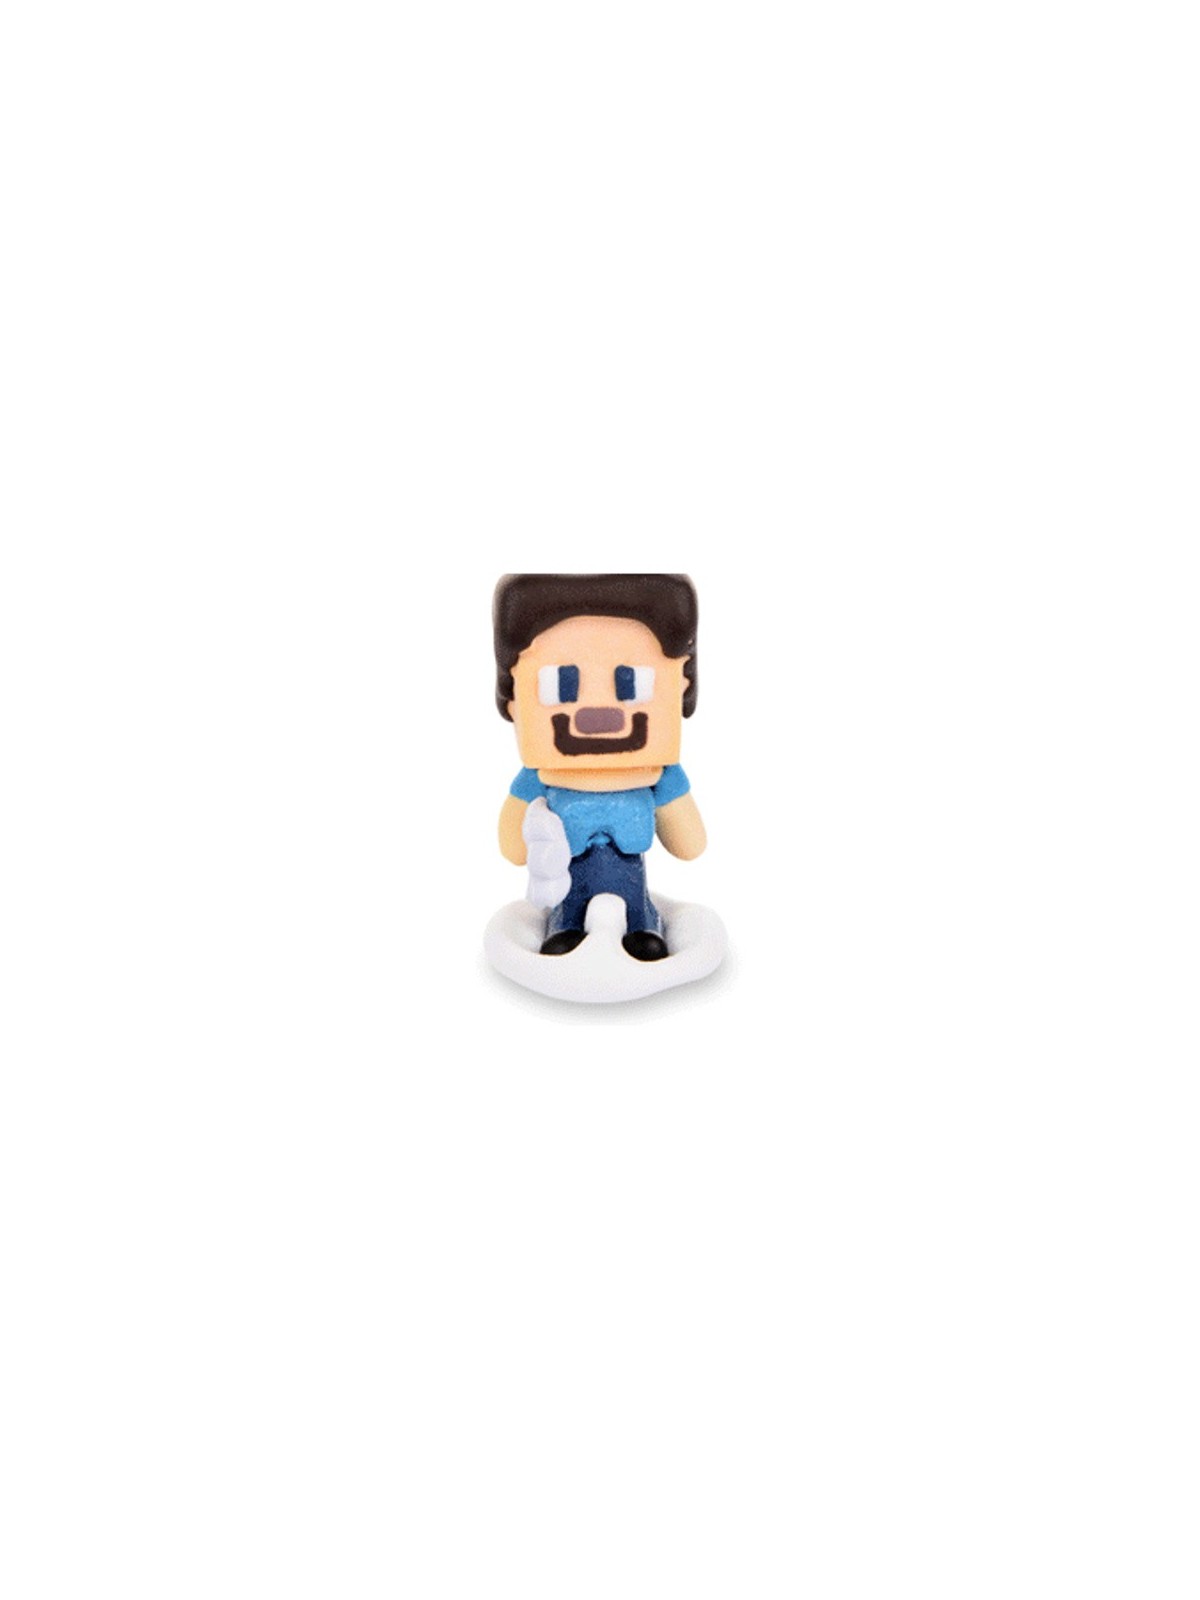 Cukrowa figurka Minecraft - Steve  - 4,6cm